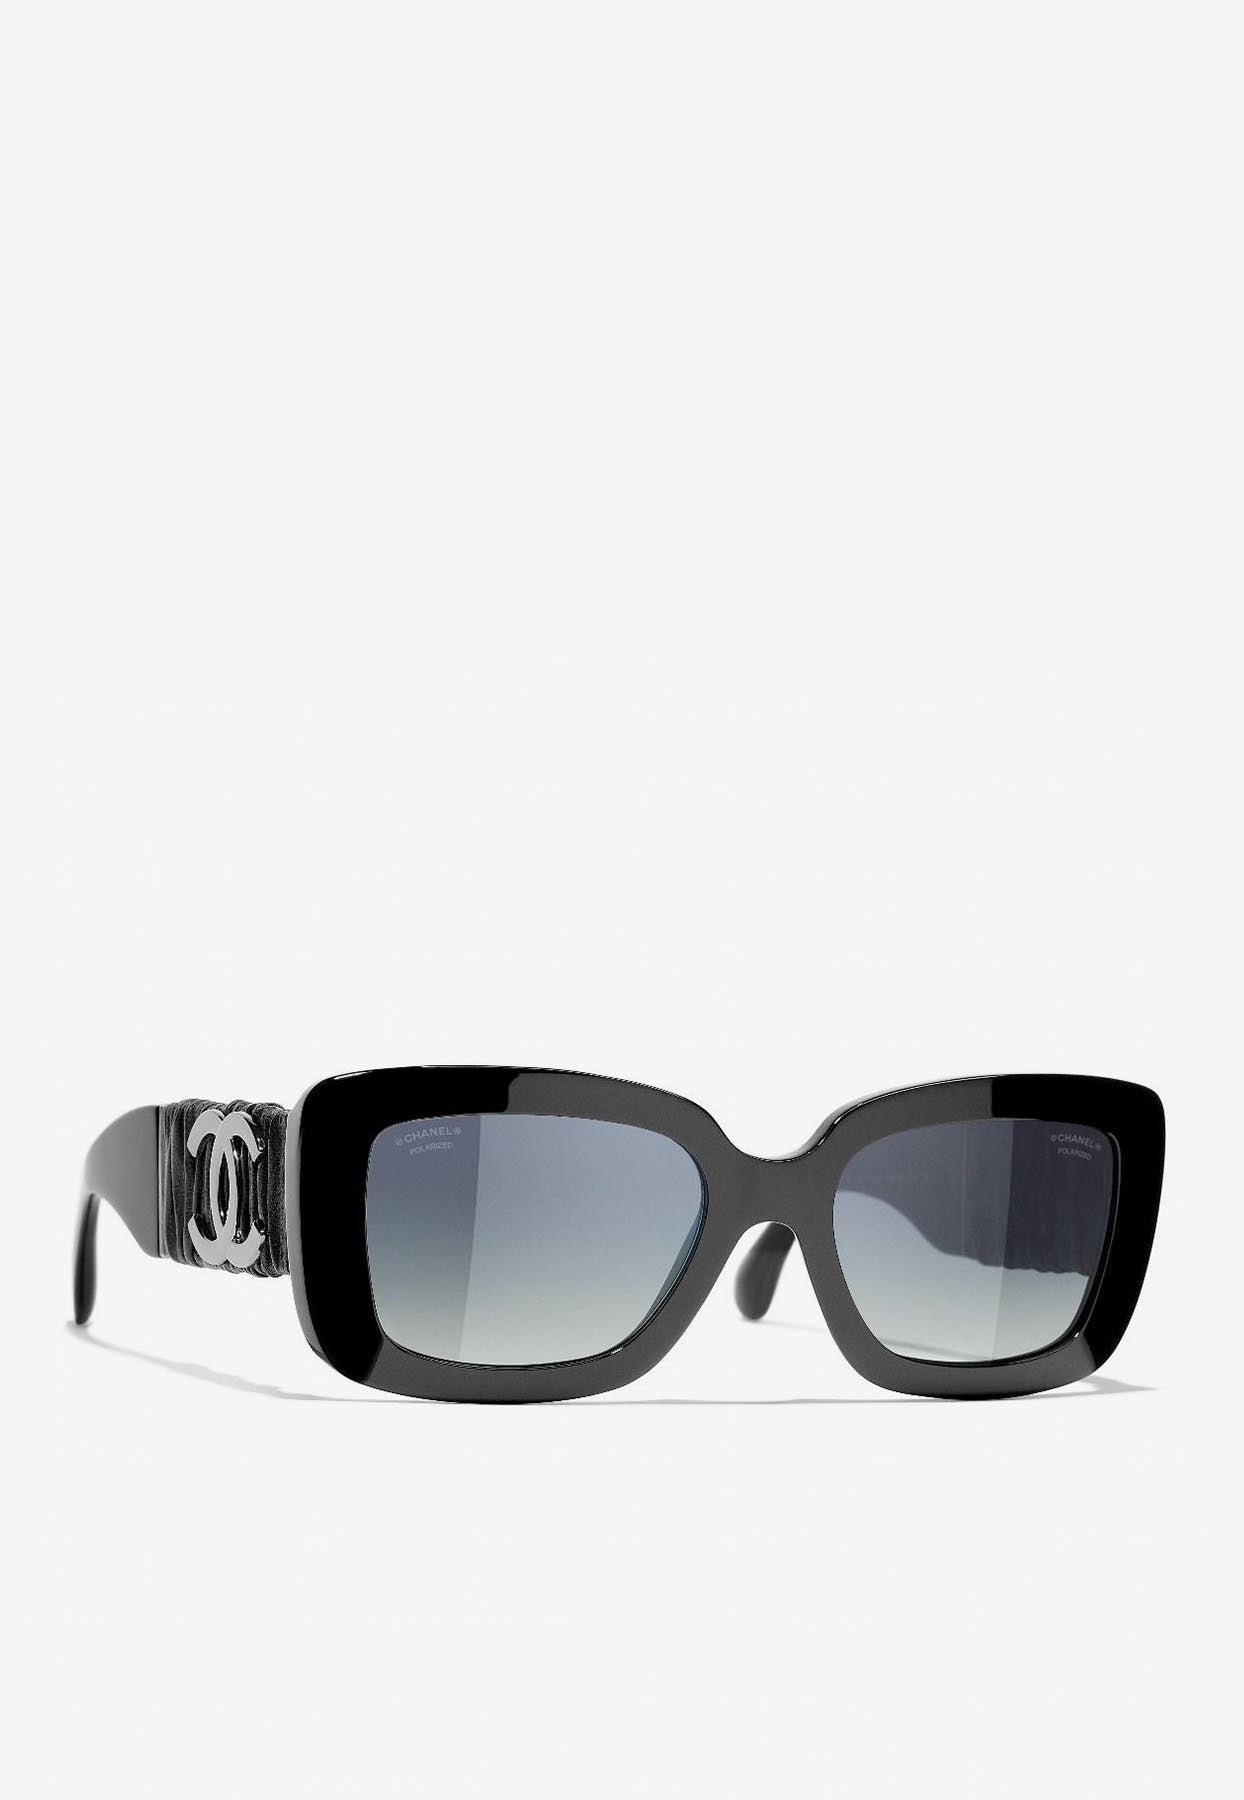 Chanel Logo Rectangular Sunglasses in Black